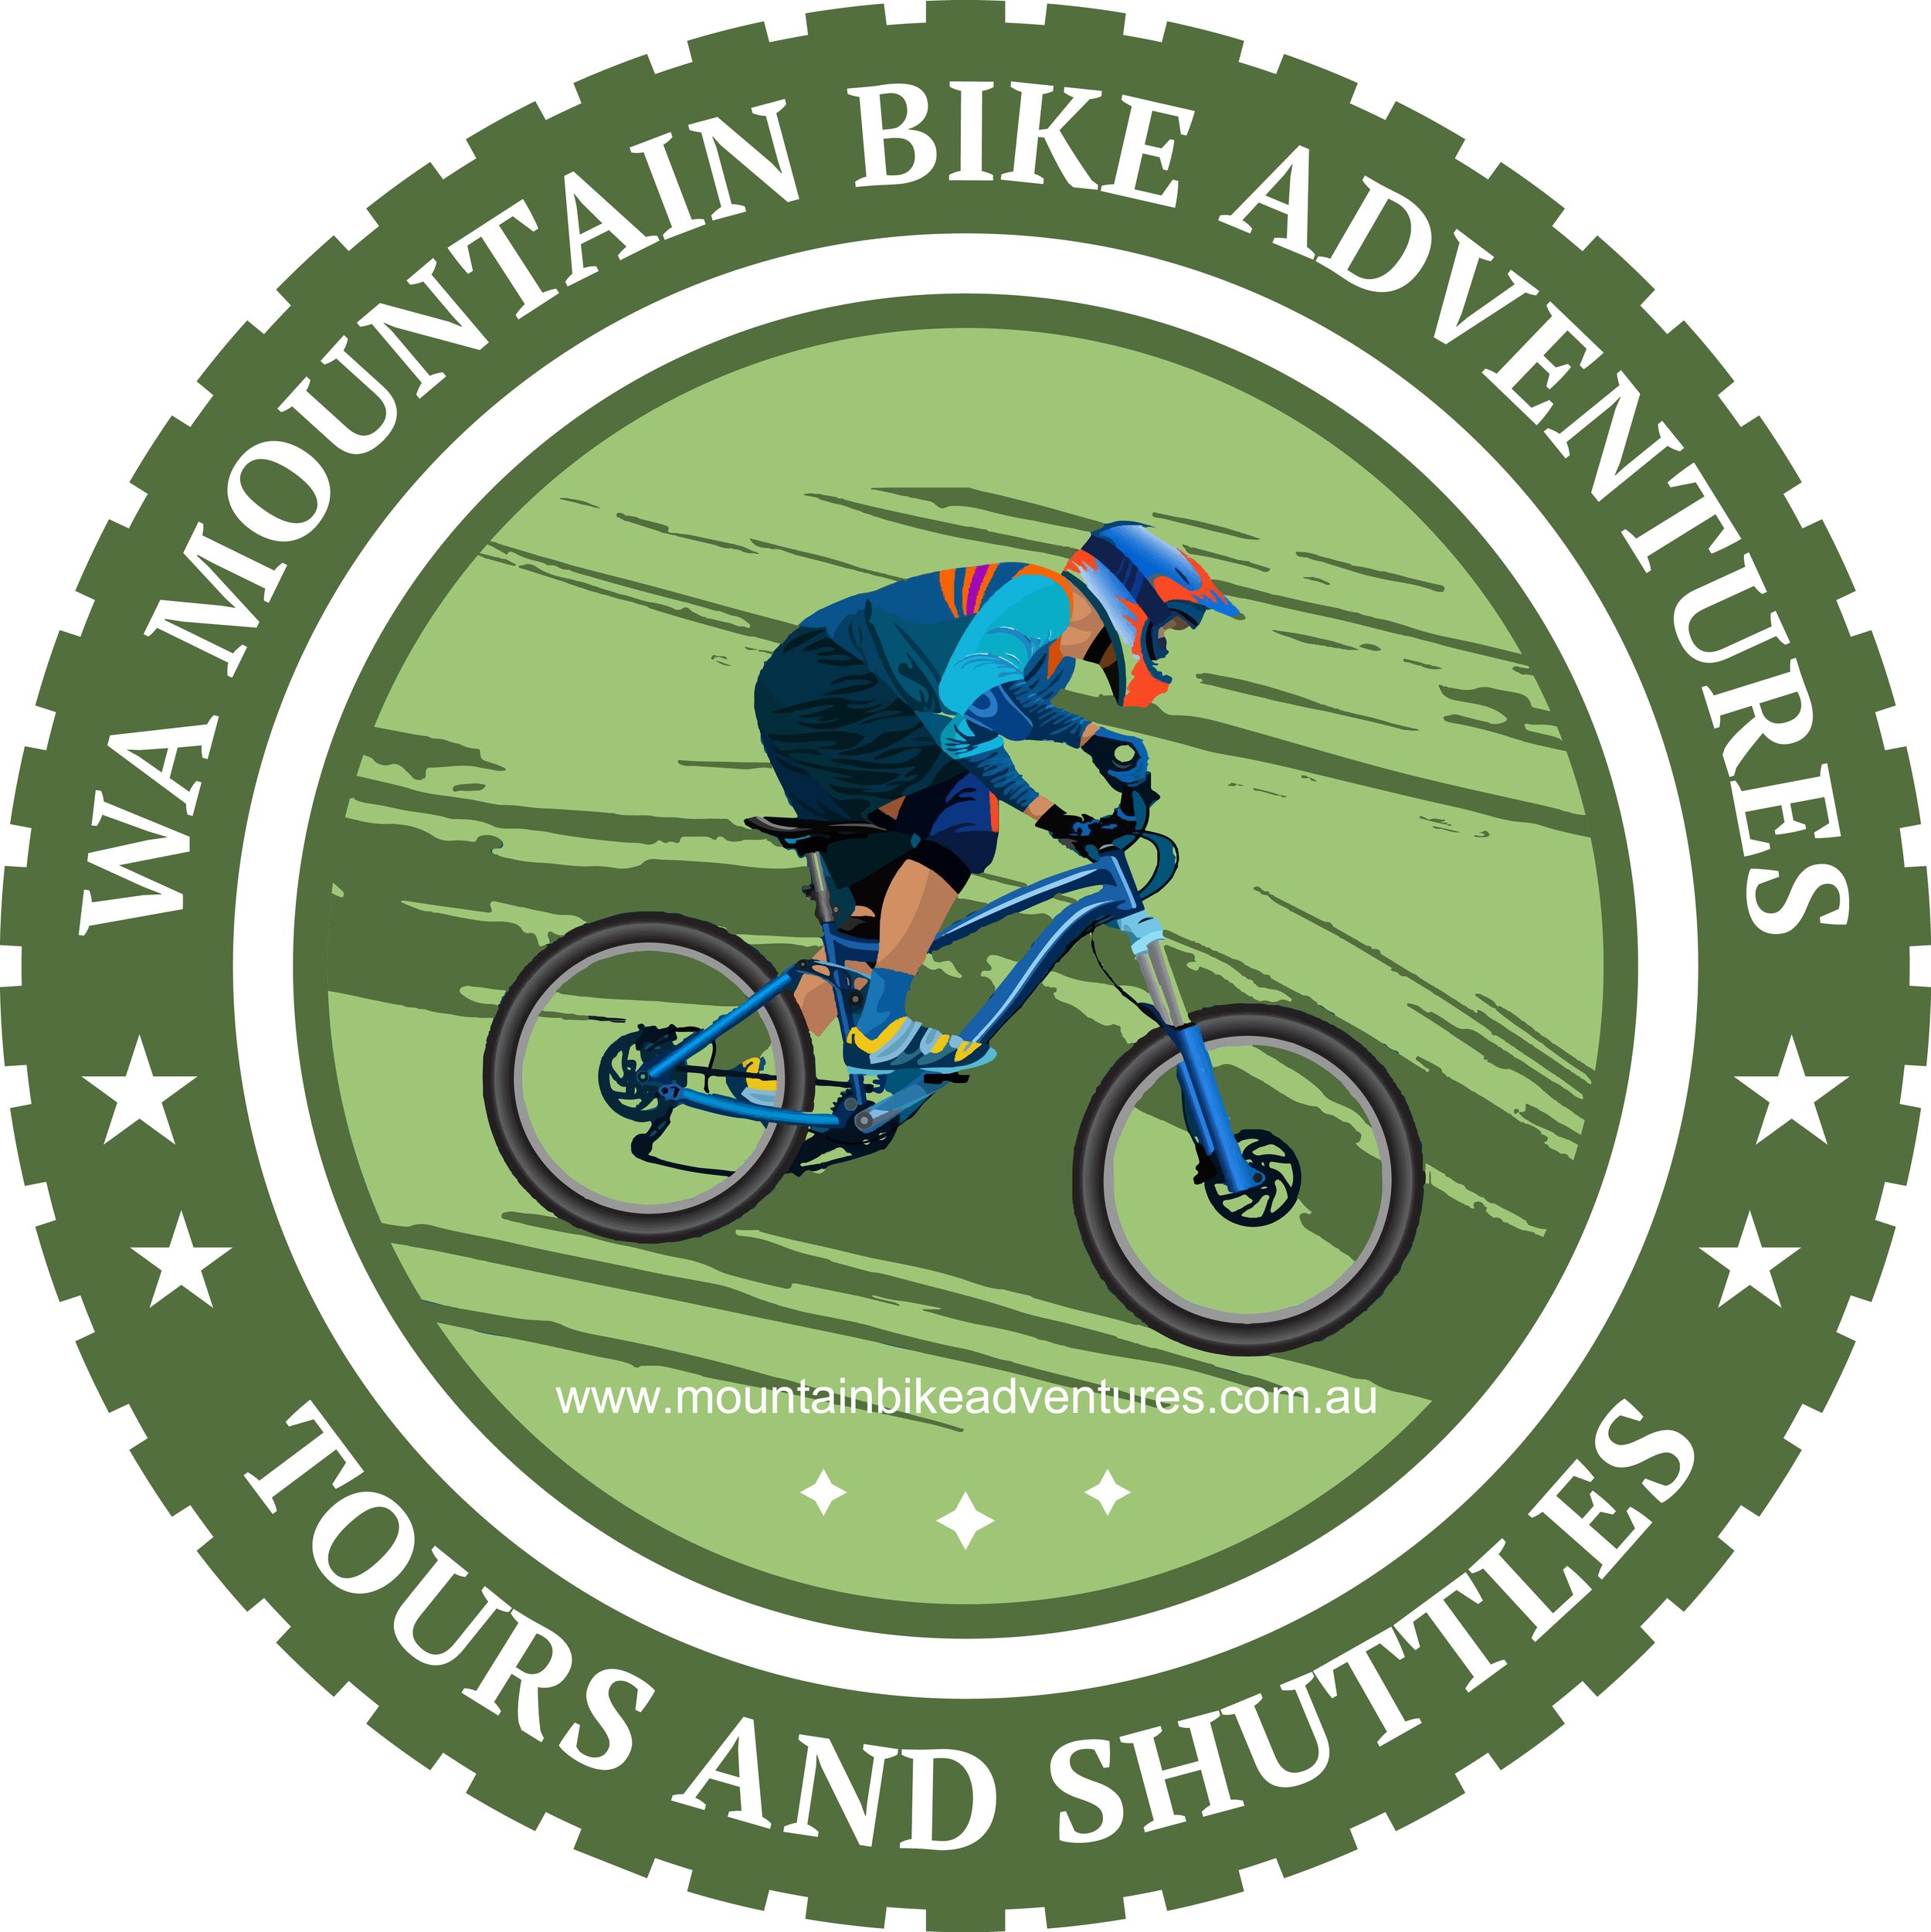 WA Mountain Bike Adventures logo.jpg